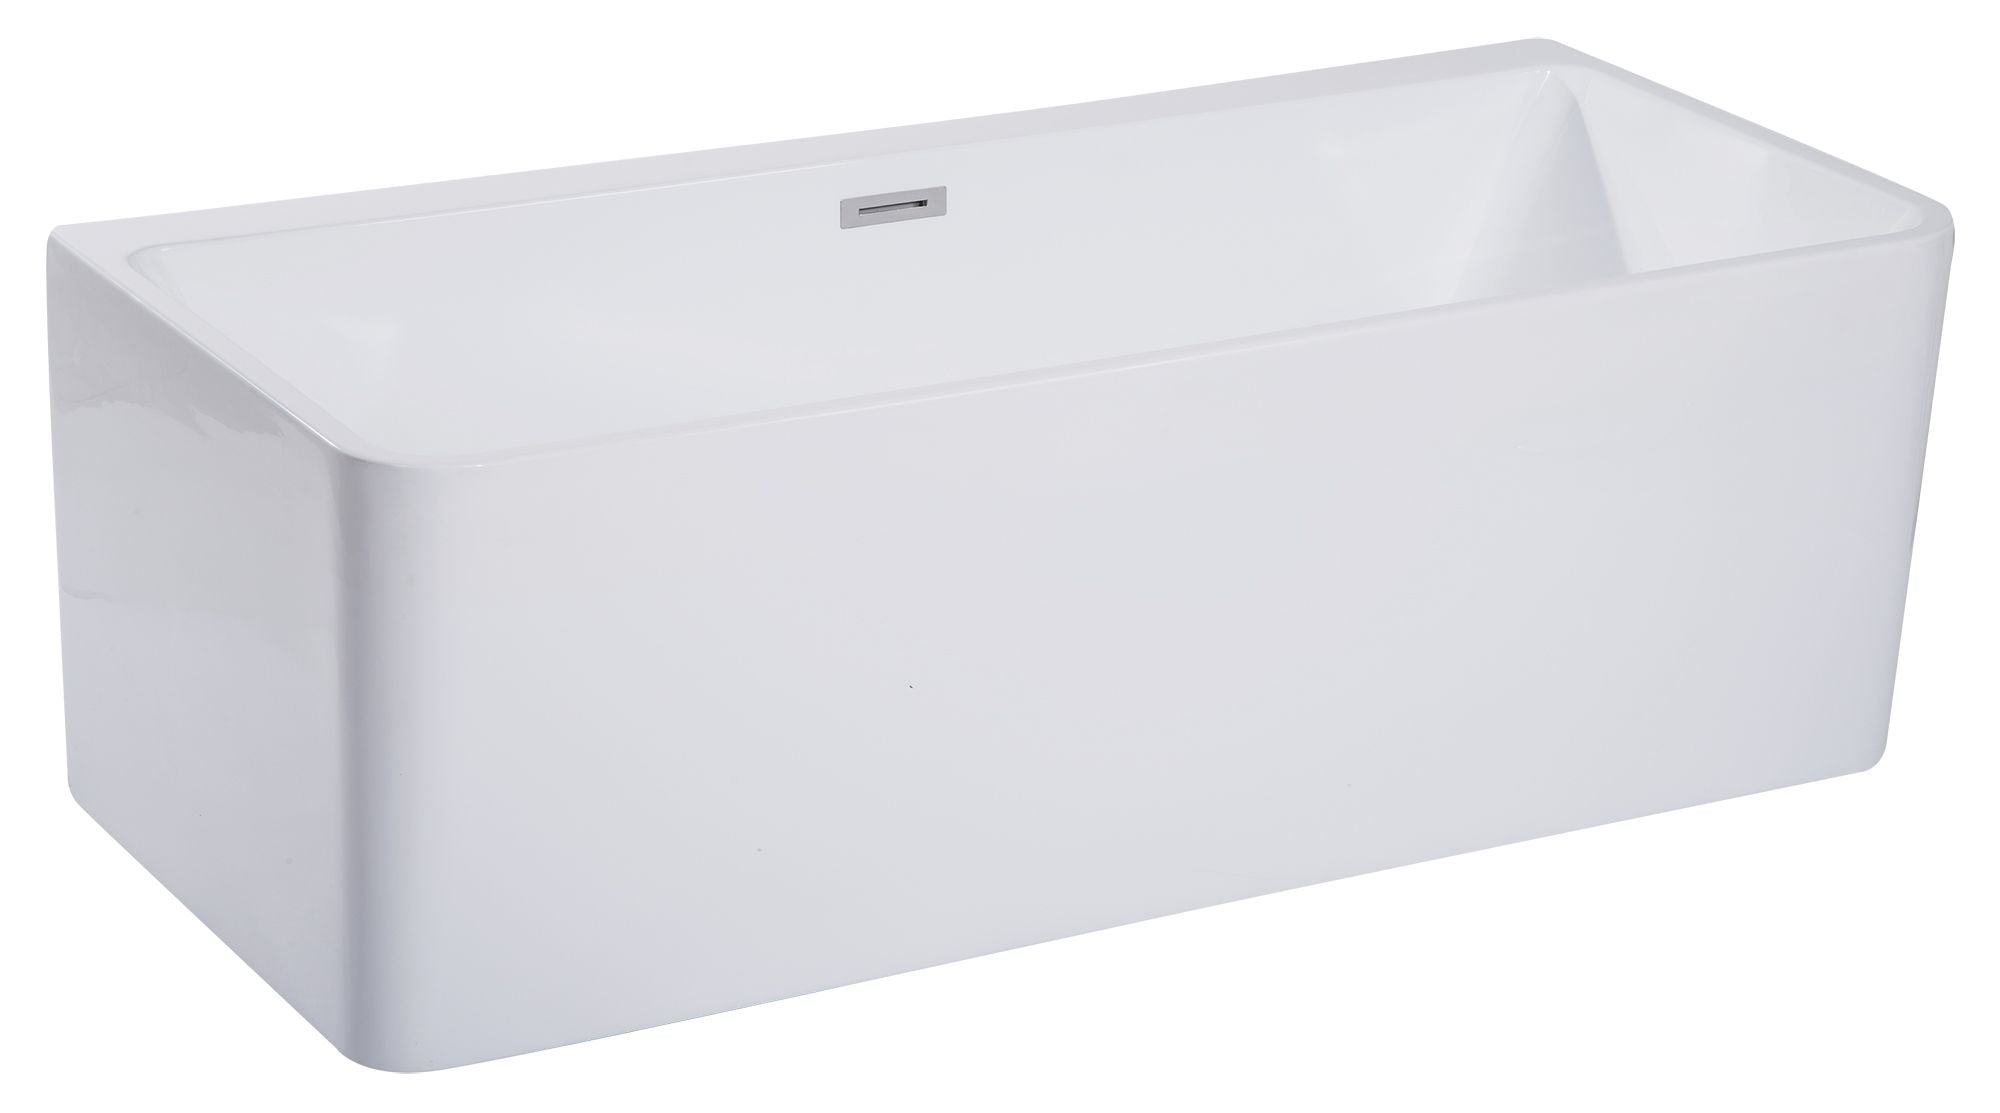 ALFI brand AB8859 67 Inch White Rectangular Acrylic Free Standing Soaking Bathtub - Elite Vitality